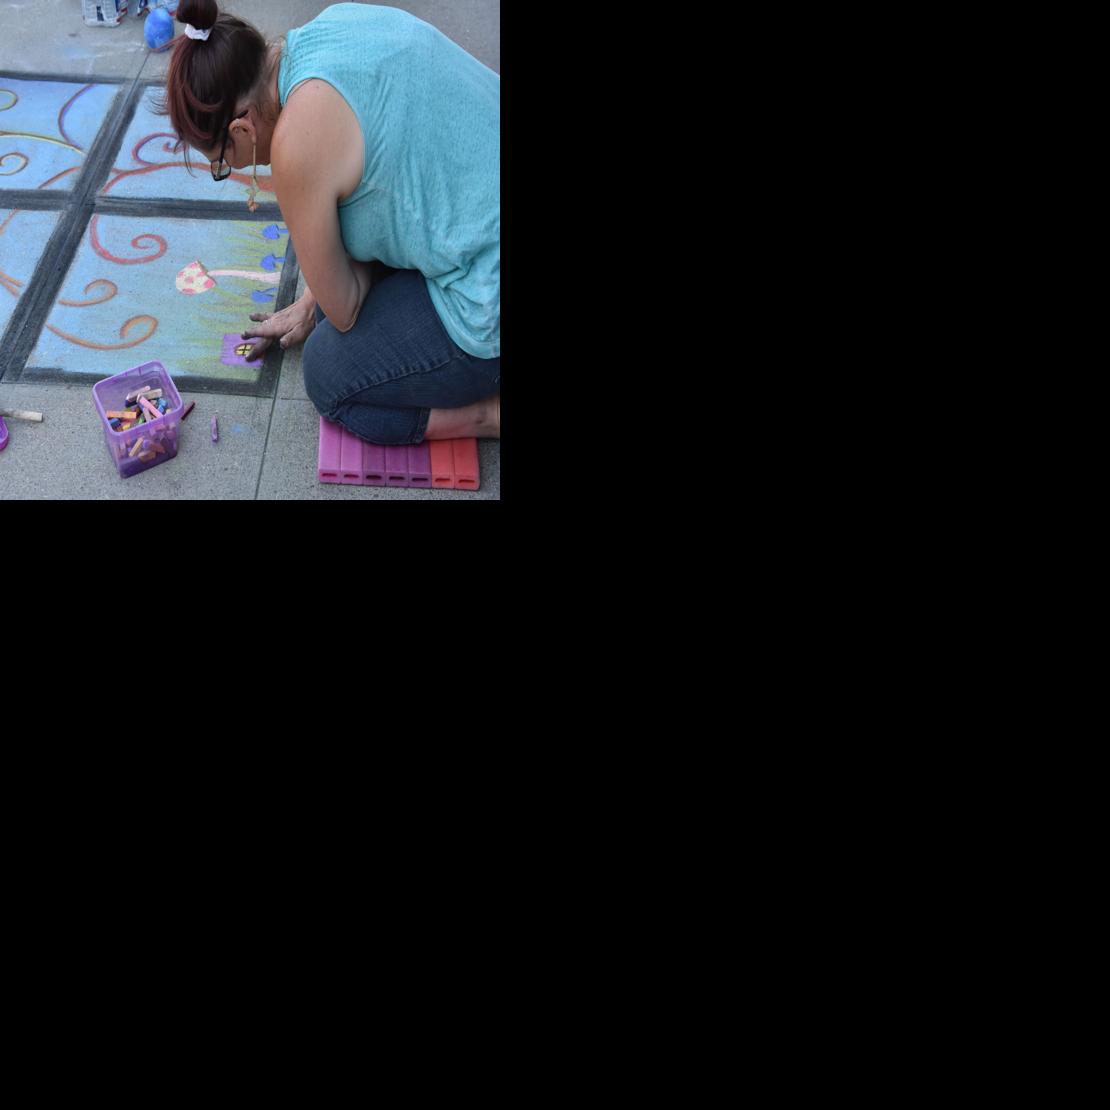 Sidewalk Chalk It Up Art Contest